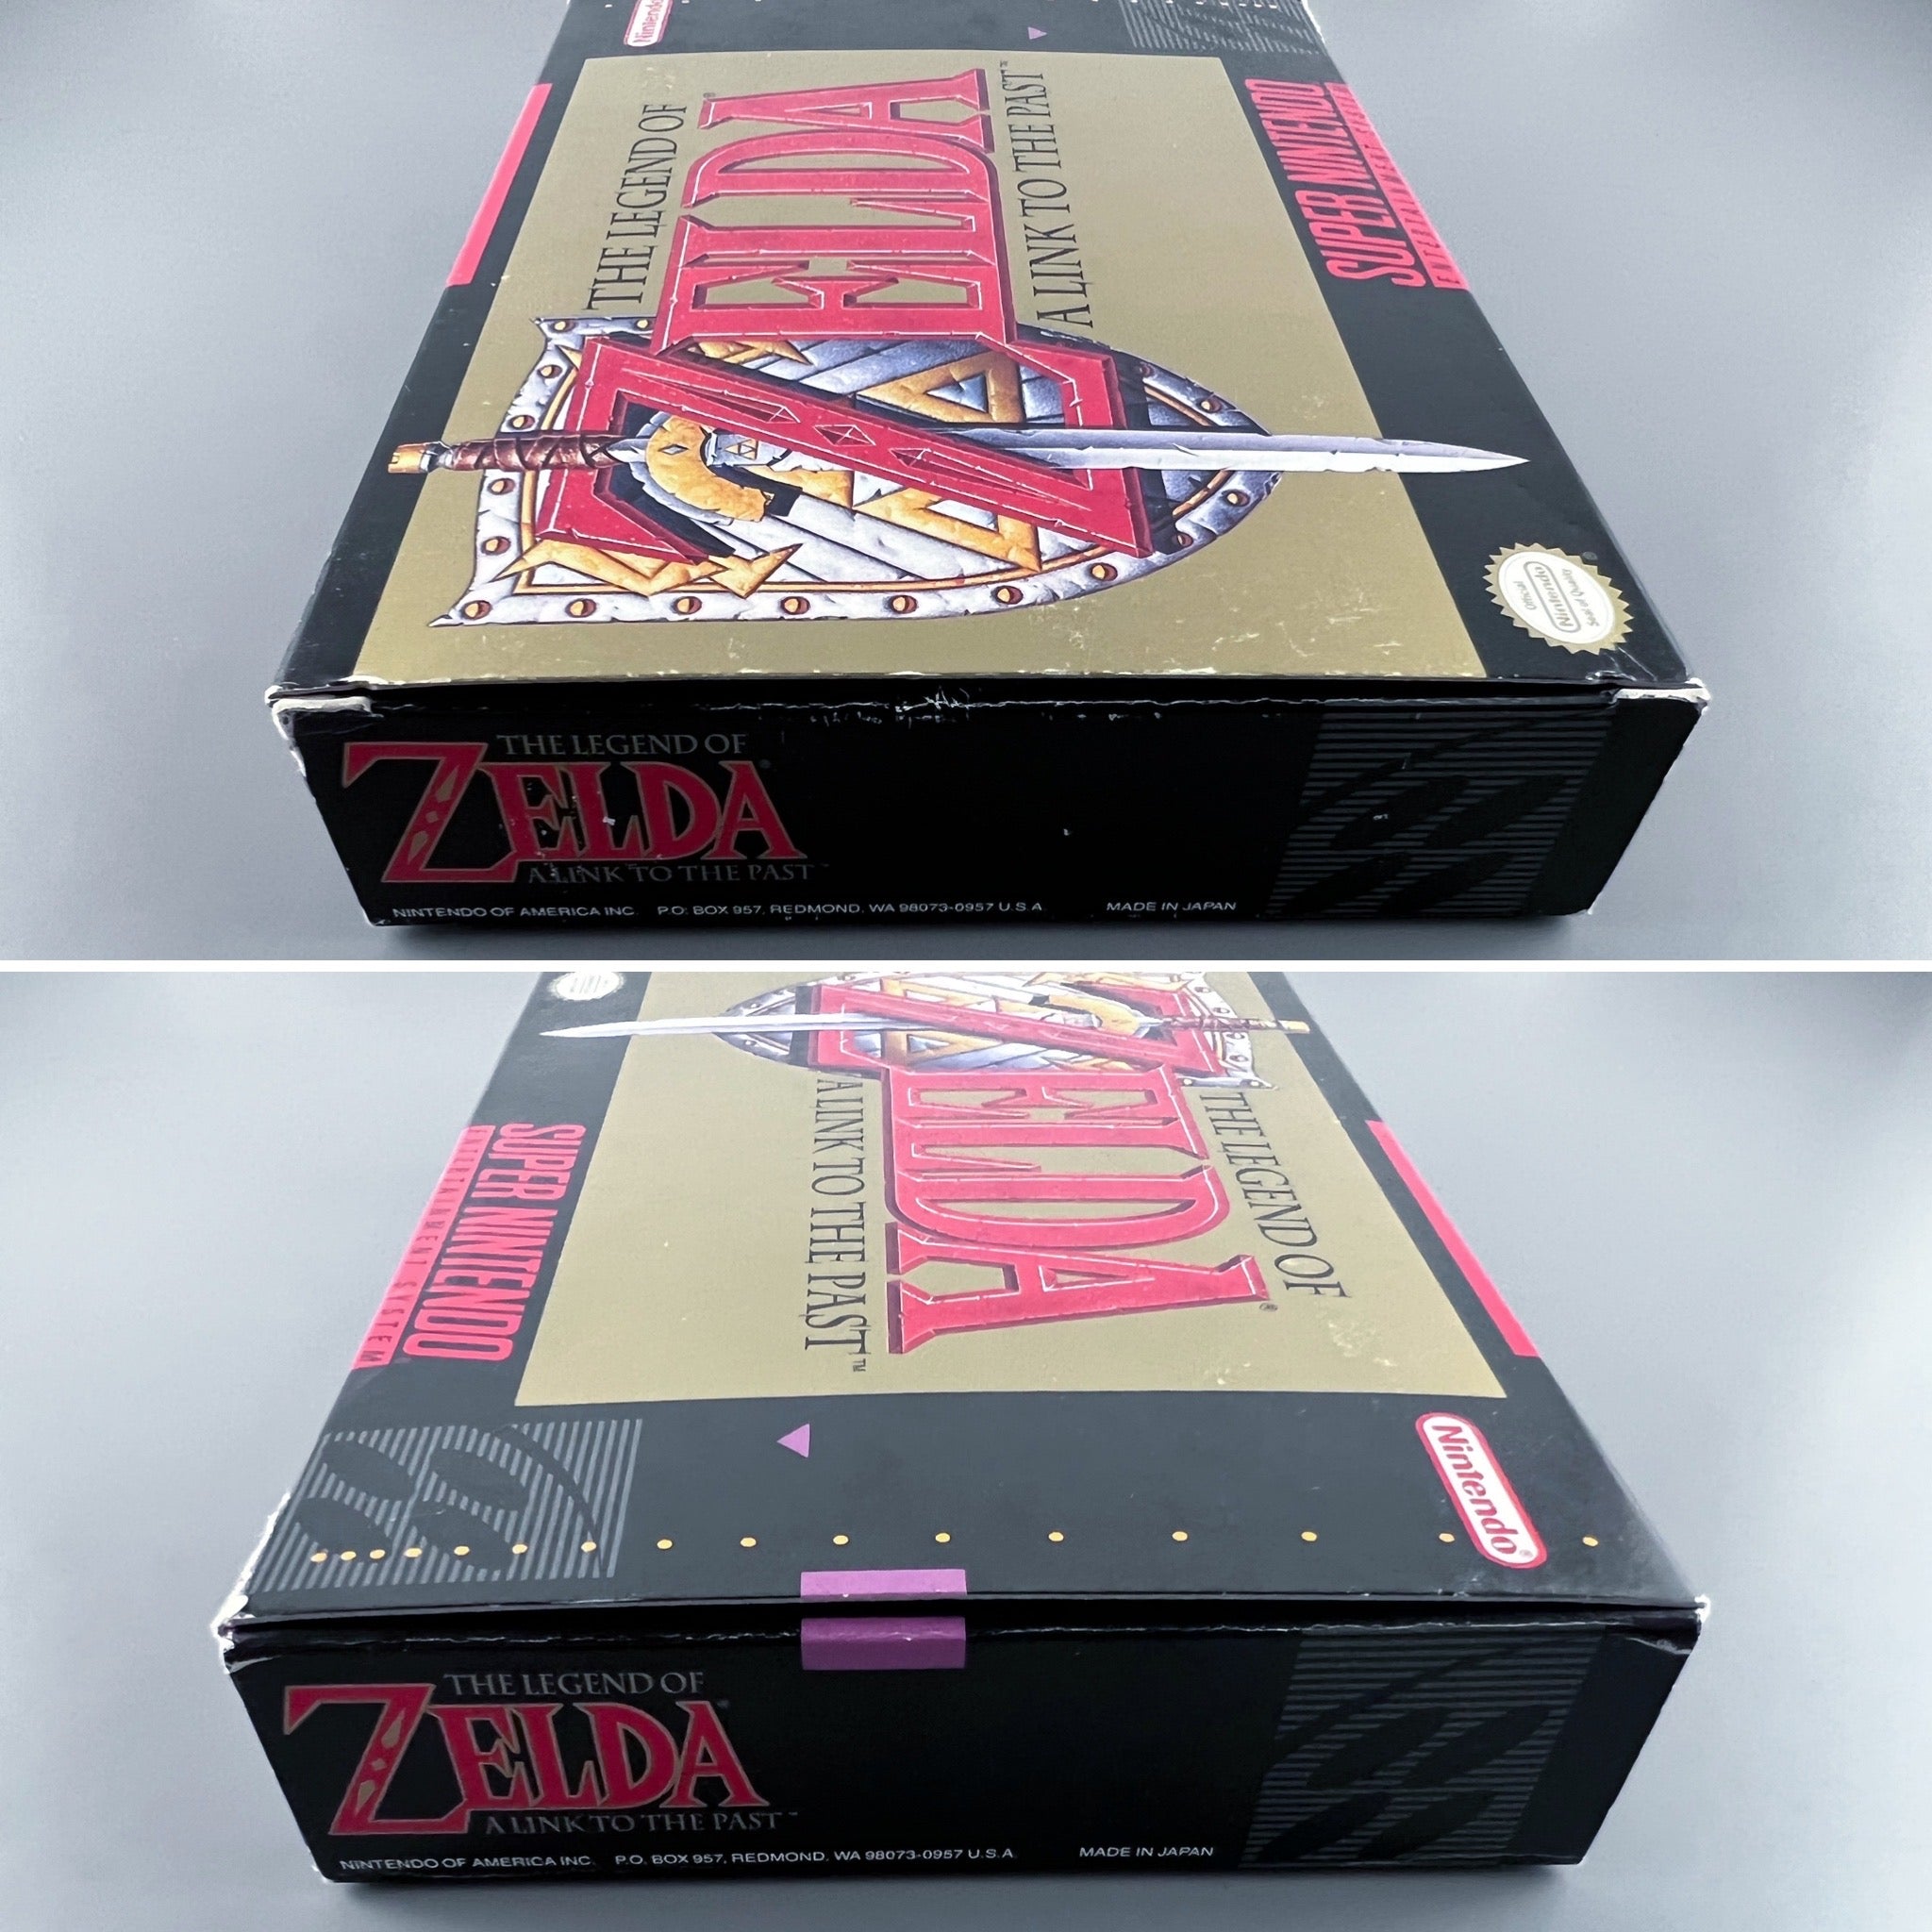 Zelda Link to the Past Super Nintendo SNES Game Complete CIB w/ Map + Tips